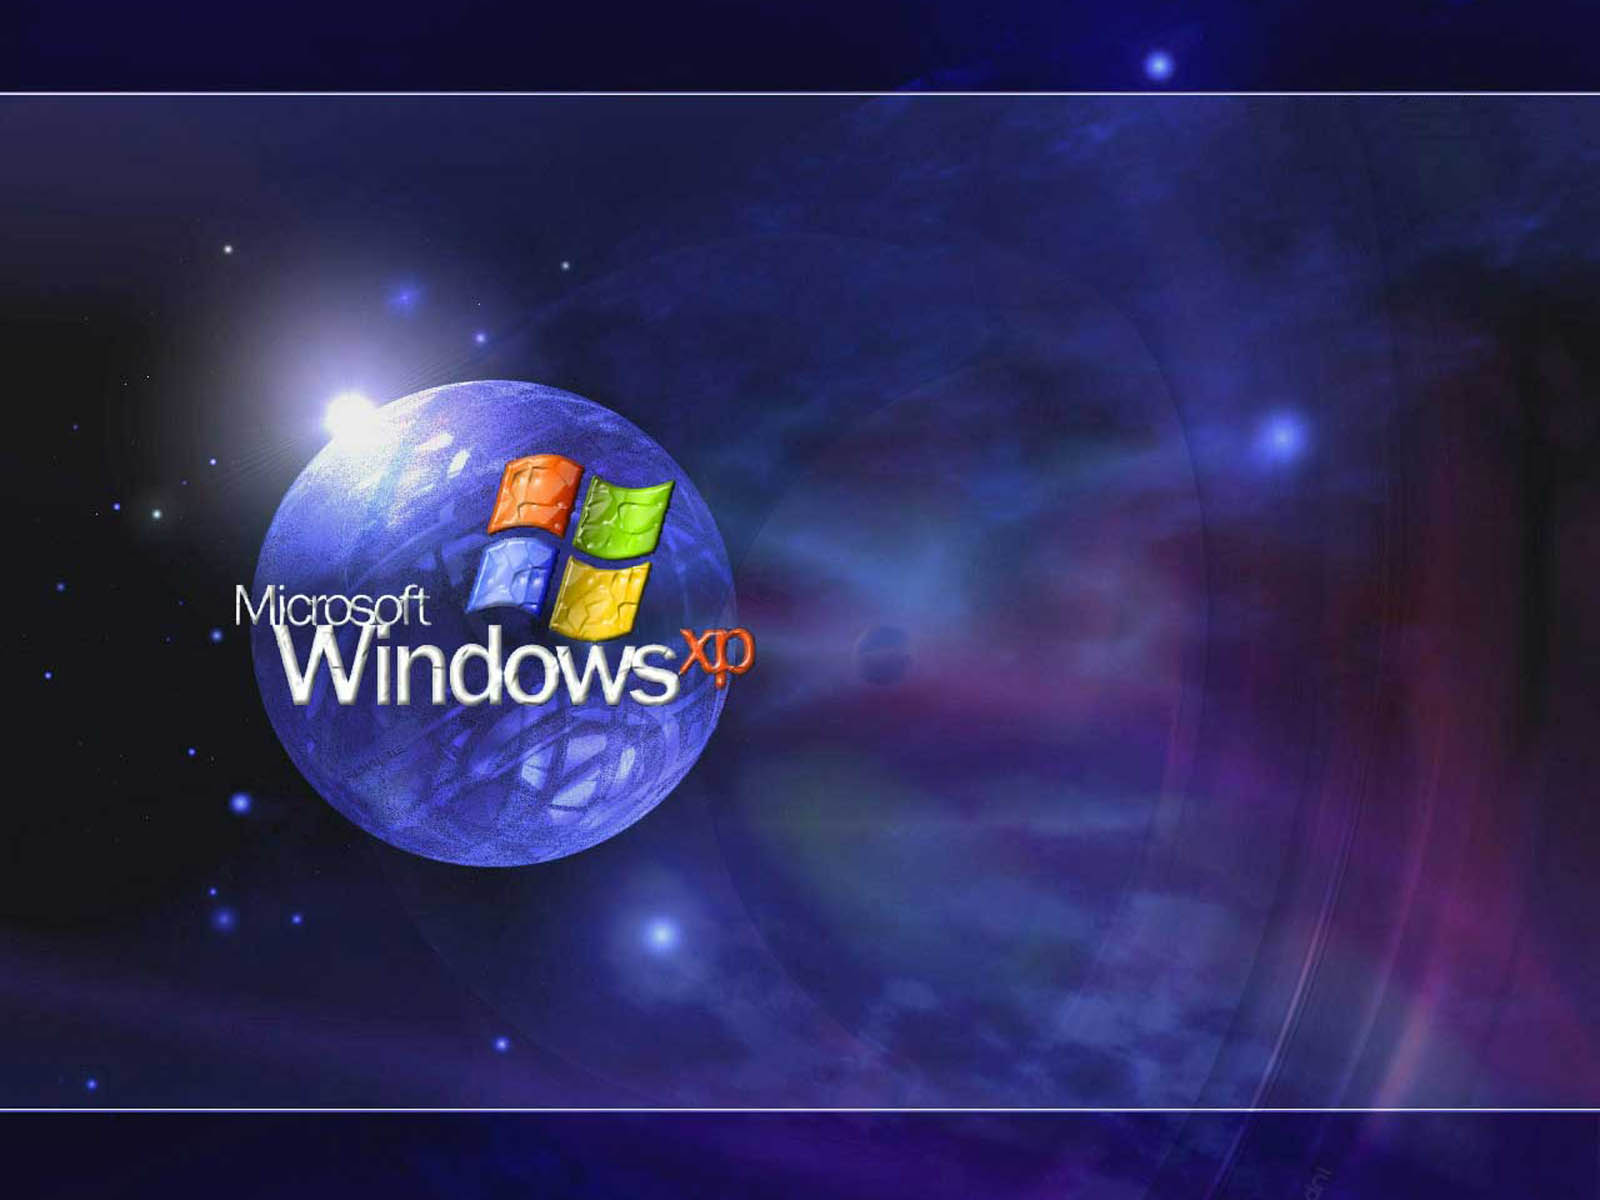 Windows xp wallpapers free download